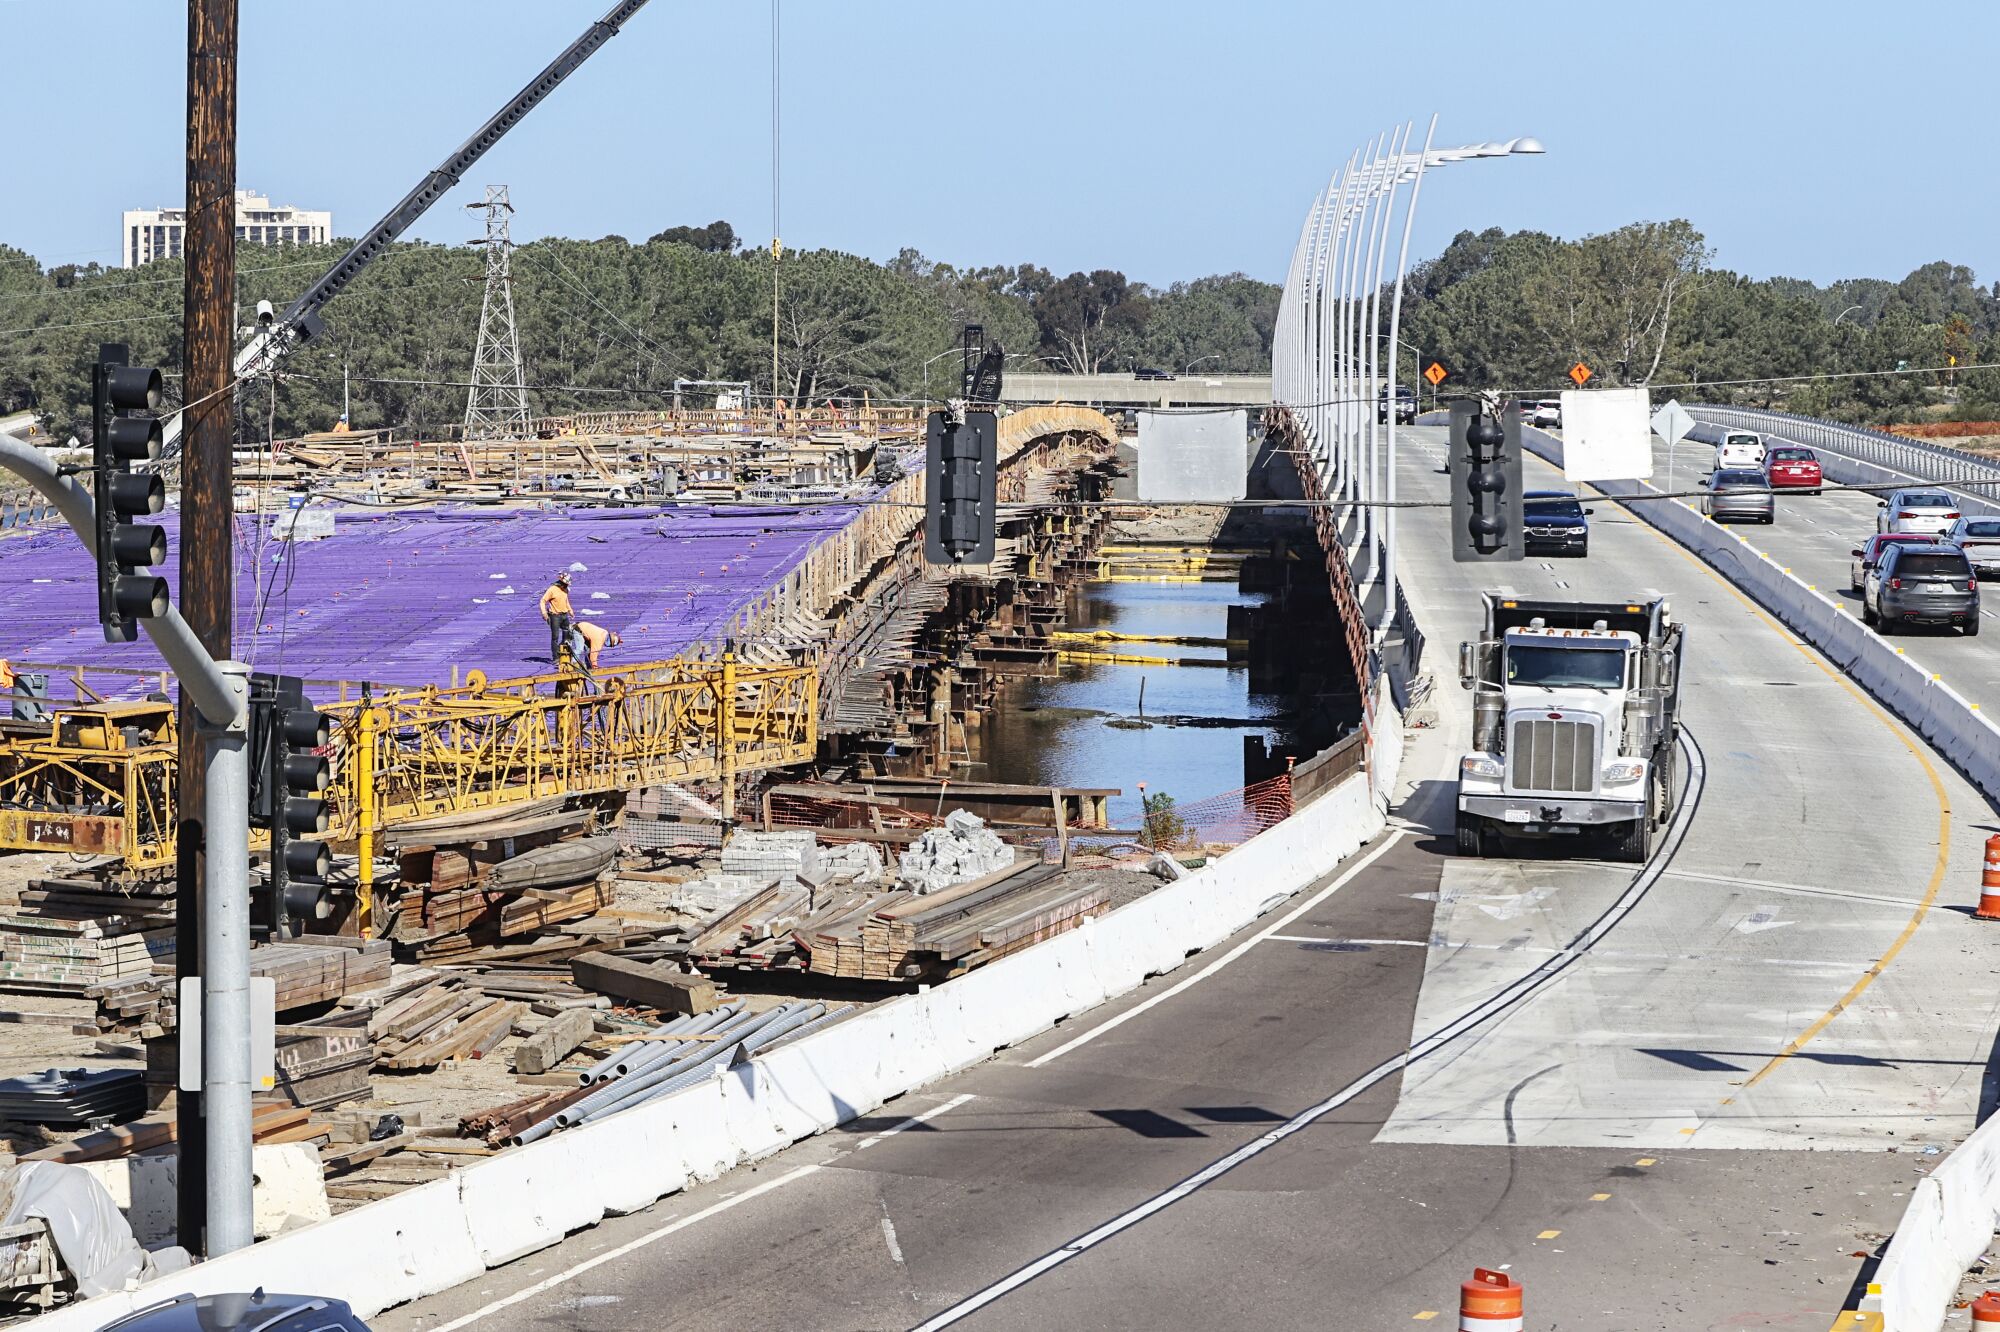  Construction crews work on the new West Mission Bay Bridge.